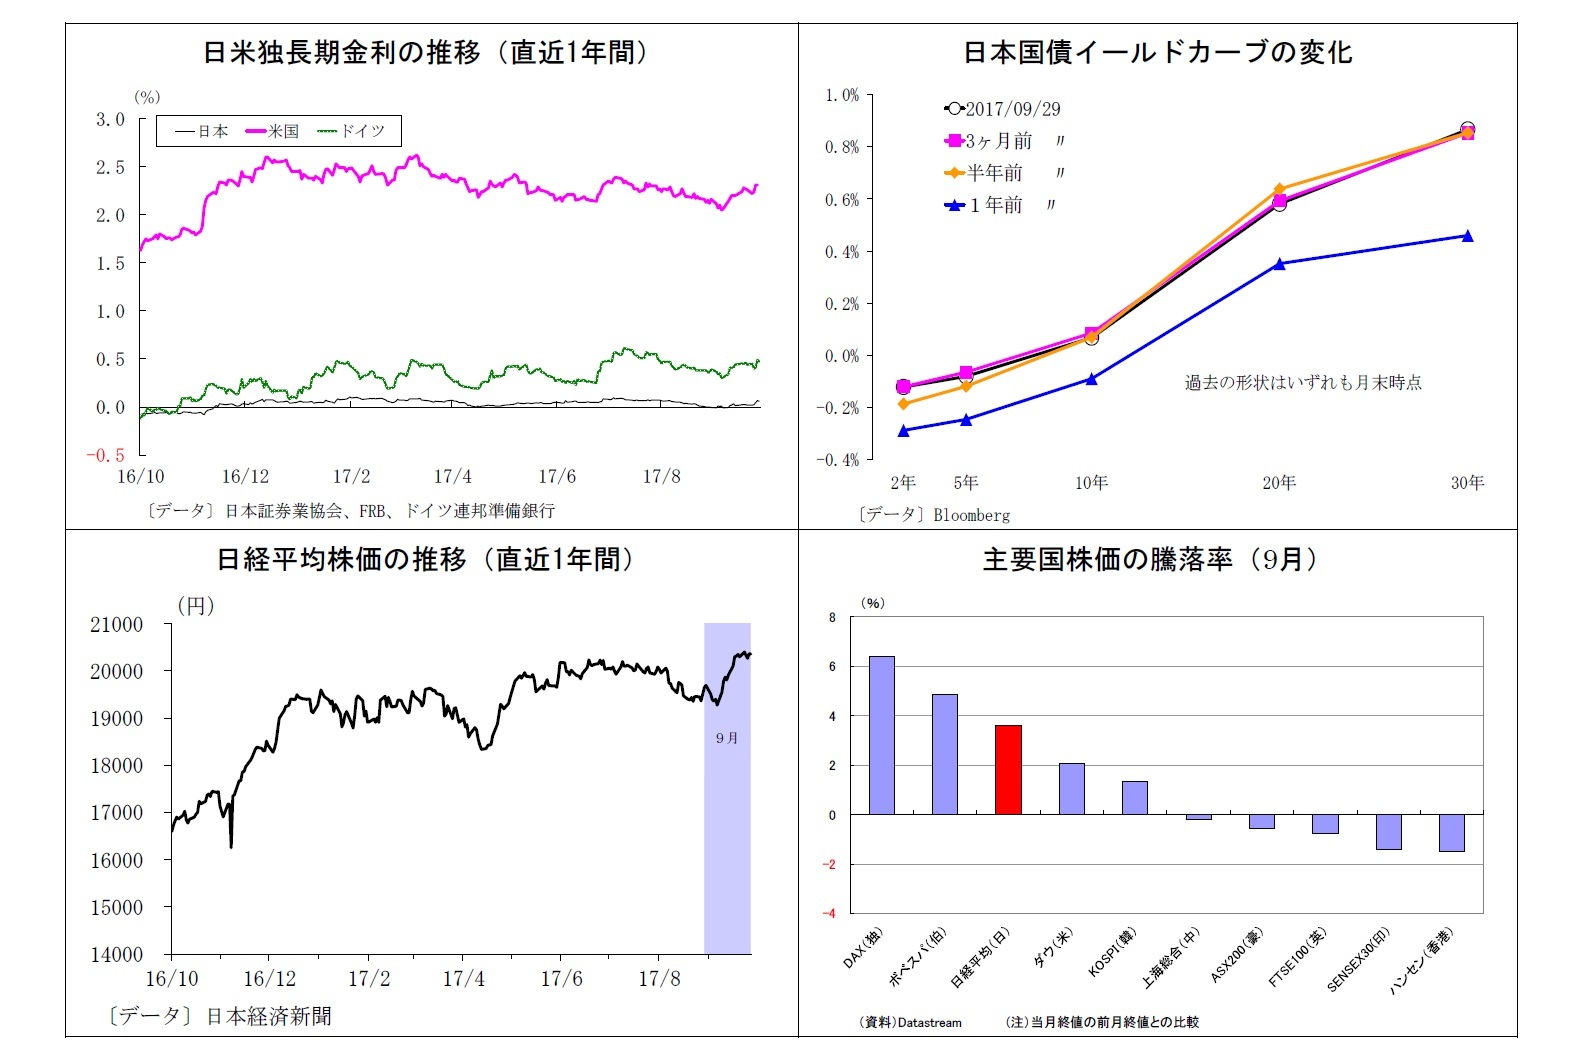 日米独長期金利の推移（直近1年間）/日本国債イールドカーブの変化/日経平均株価の推移（直近1年間）/主要国株価の騰落率（9月）